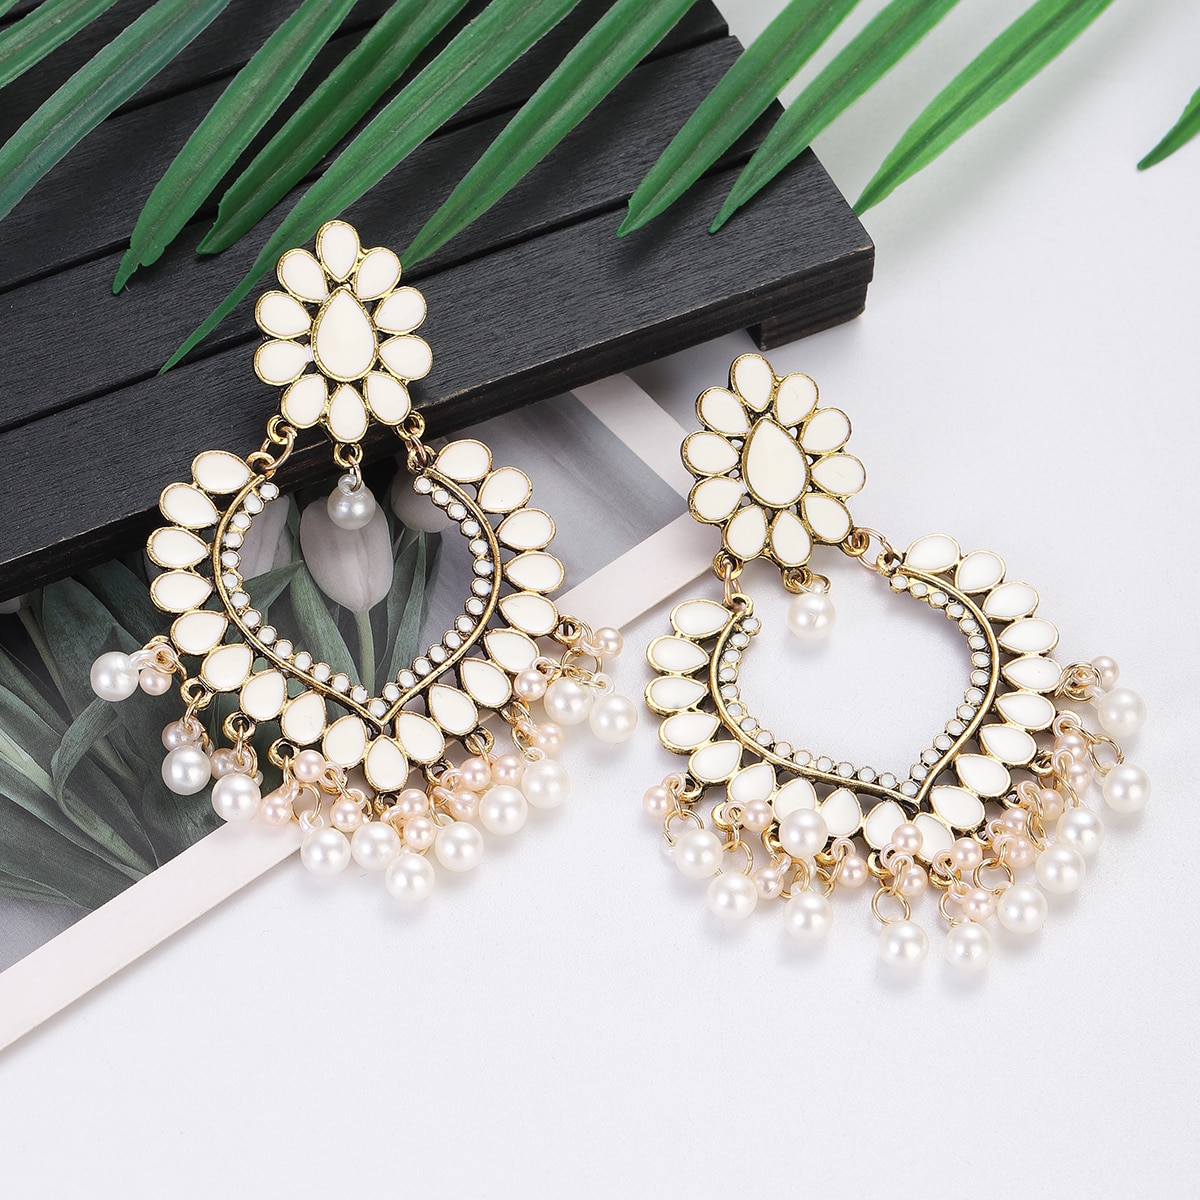 Ethnic-Vintage-White-Black-Heart-Shape-Dangle-Earrings-Female-Hollow-Flower-Pearl-Tassel-Earrings-In-1005005057346548-8